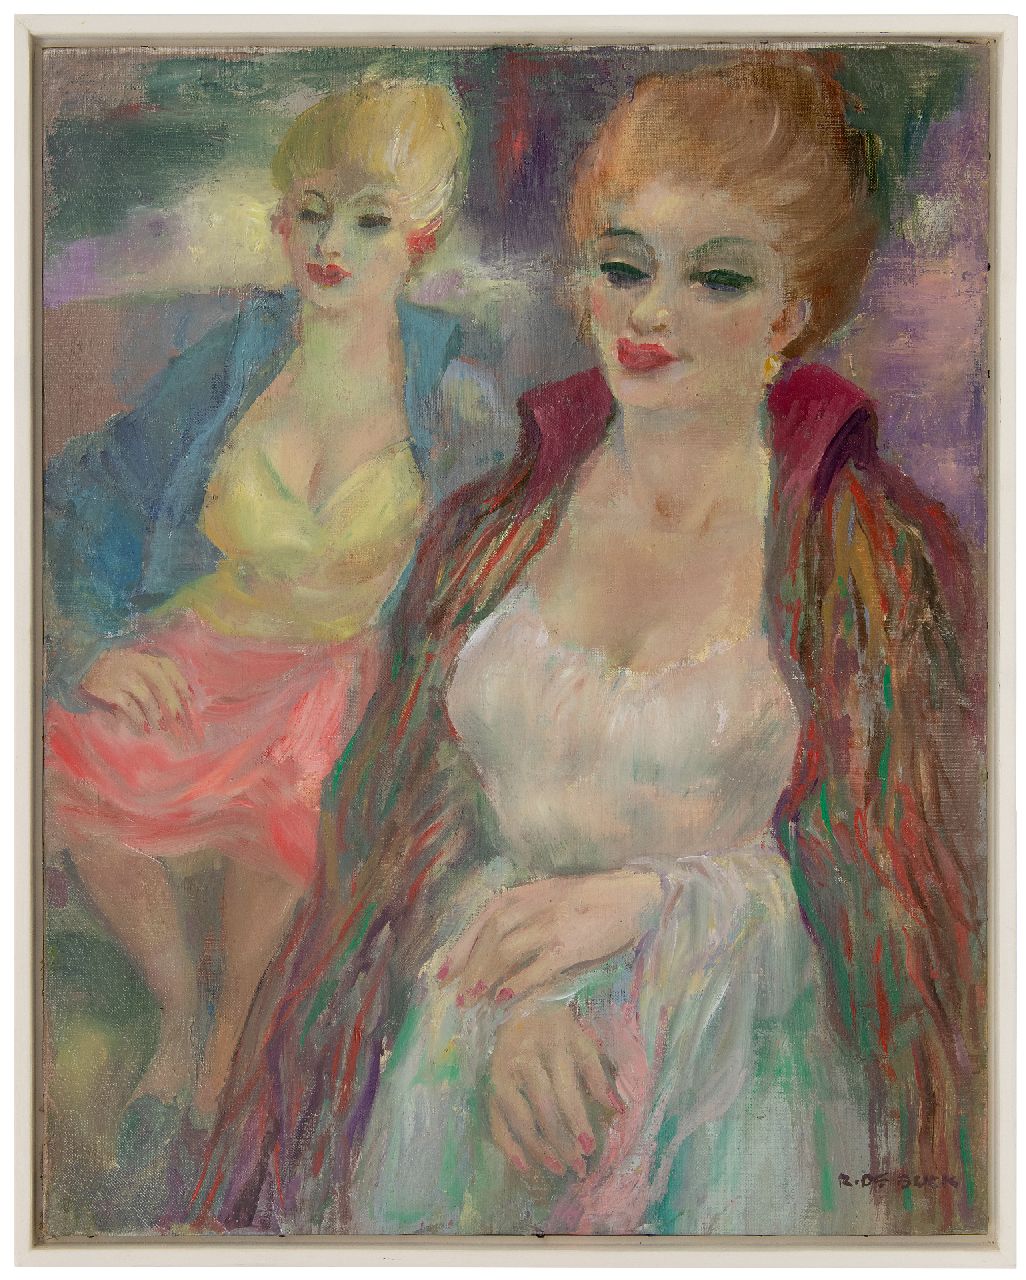 Buck R. de | Raphaël de Buck | Paintings offered for sale | Two women, oil on canvas 64.1 x 51.2 cm, signed l.r.